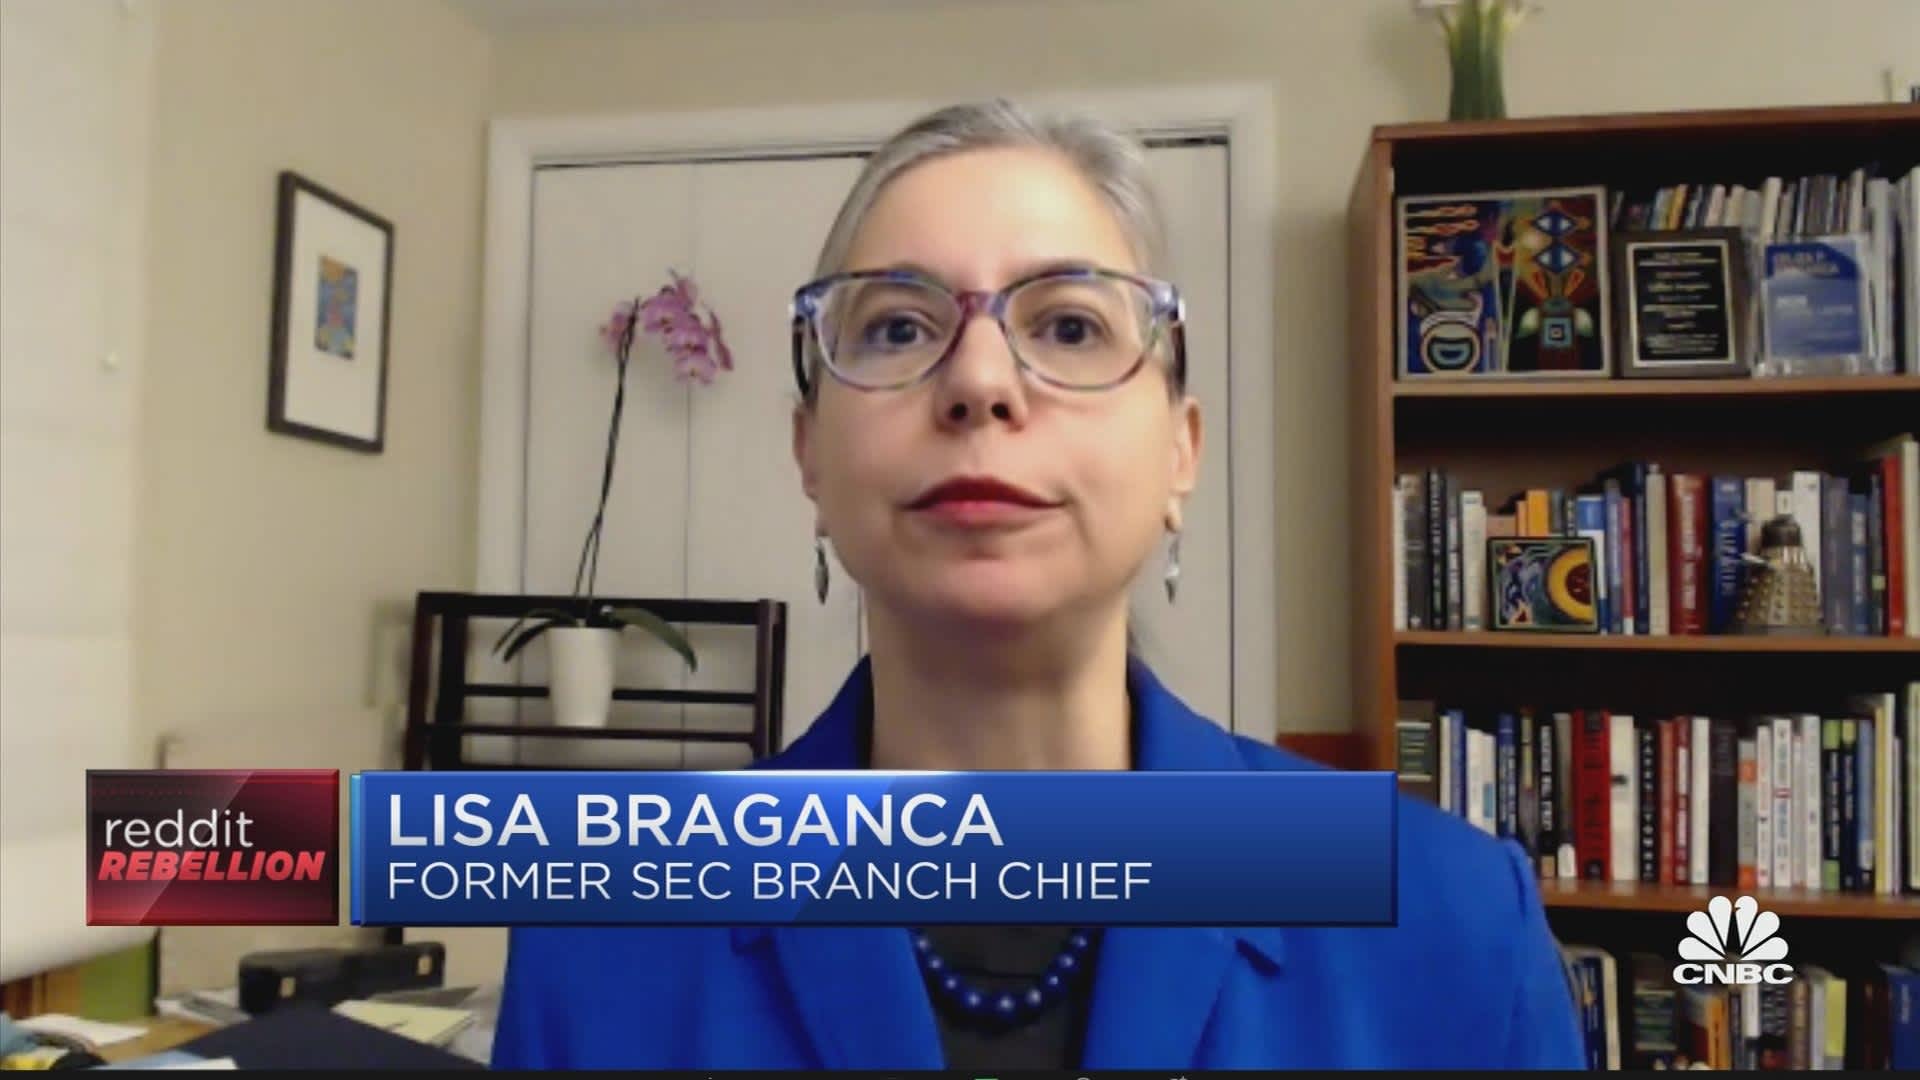 Former SEC Branch Chief – Lisa Braganca (Source: CNBC)